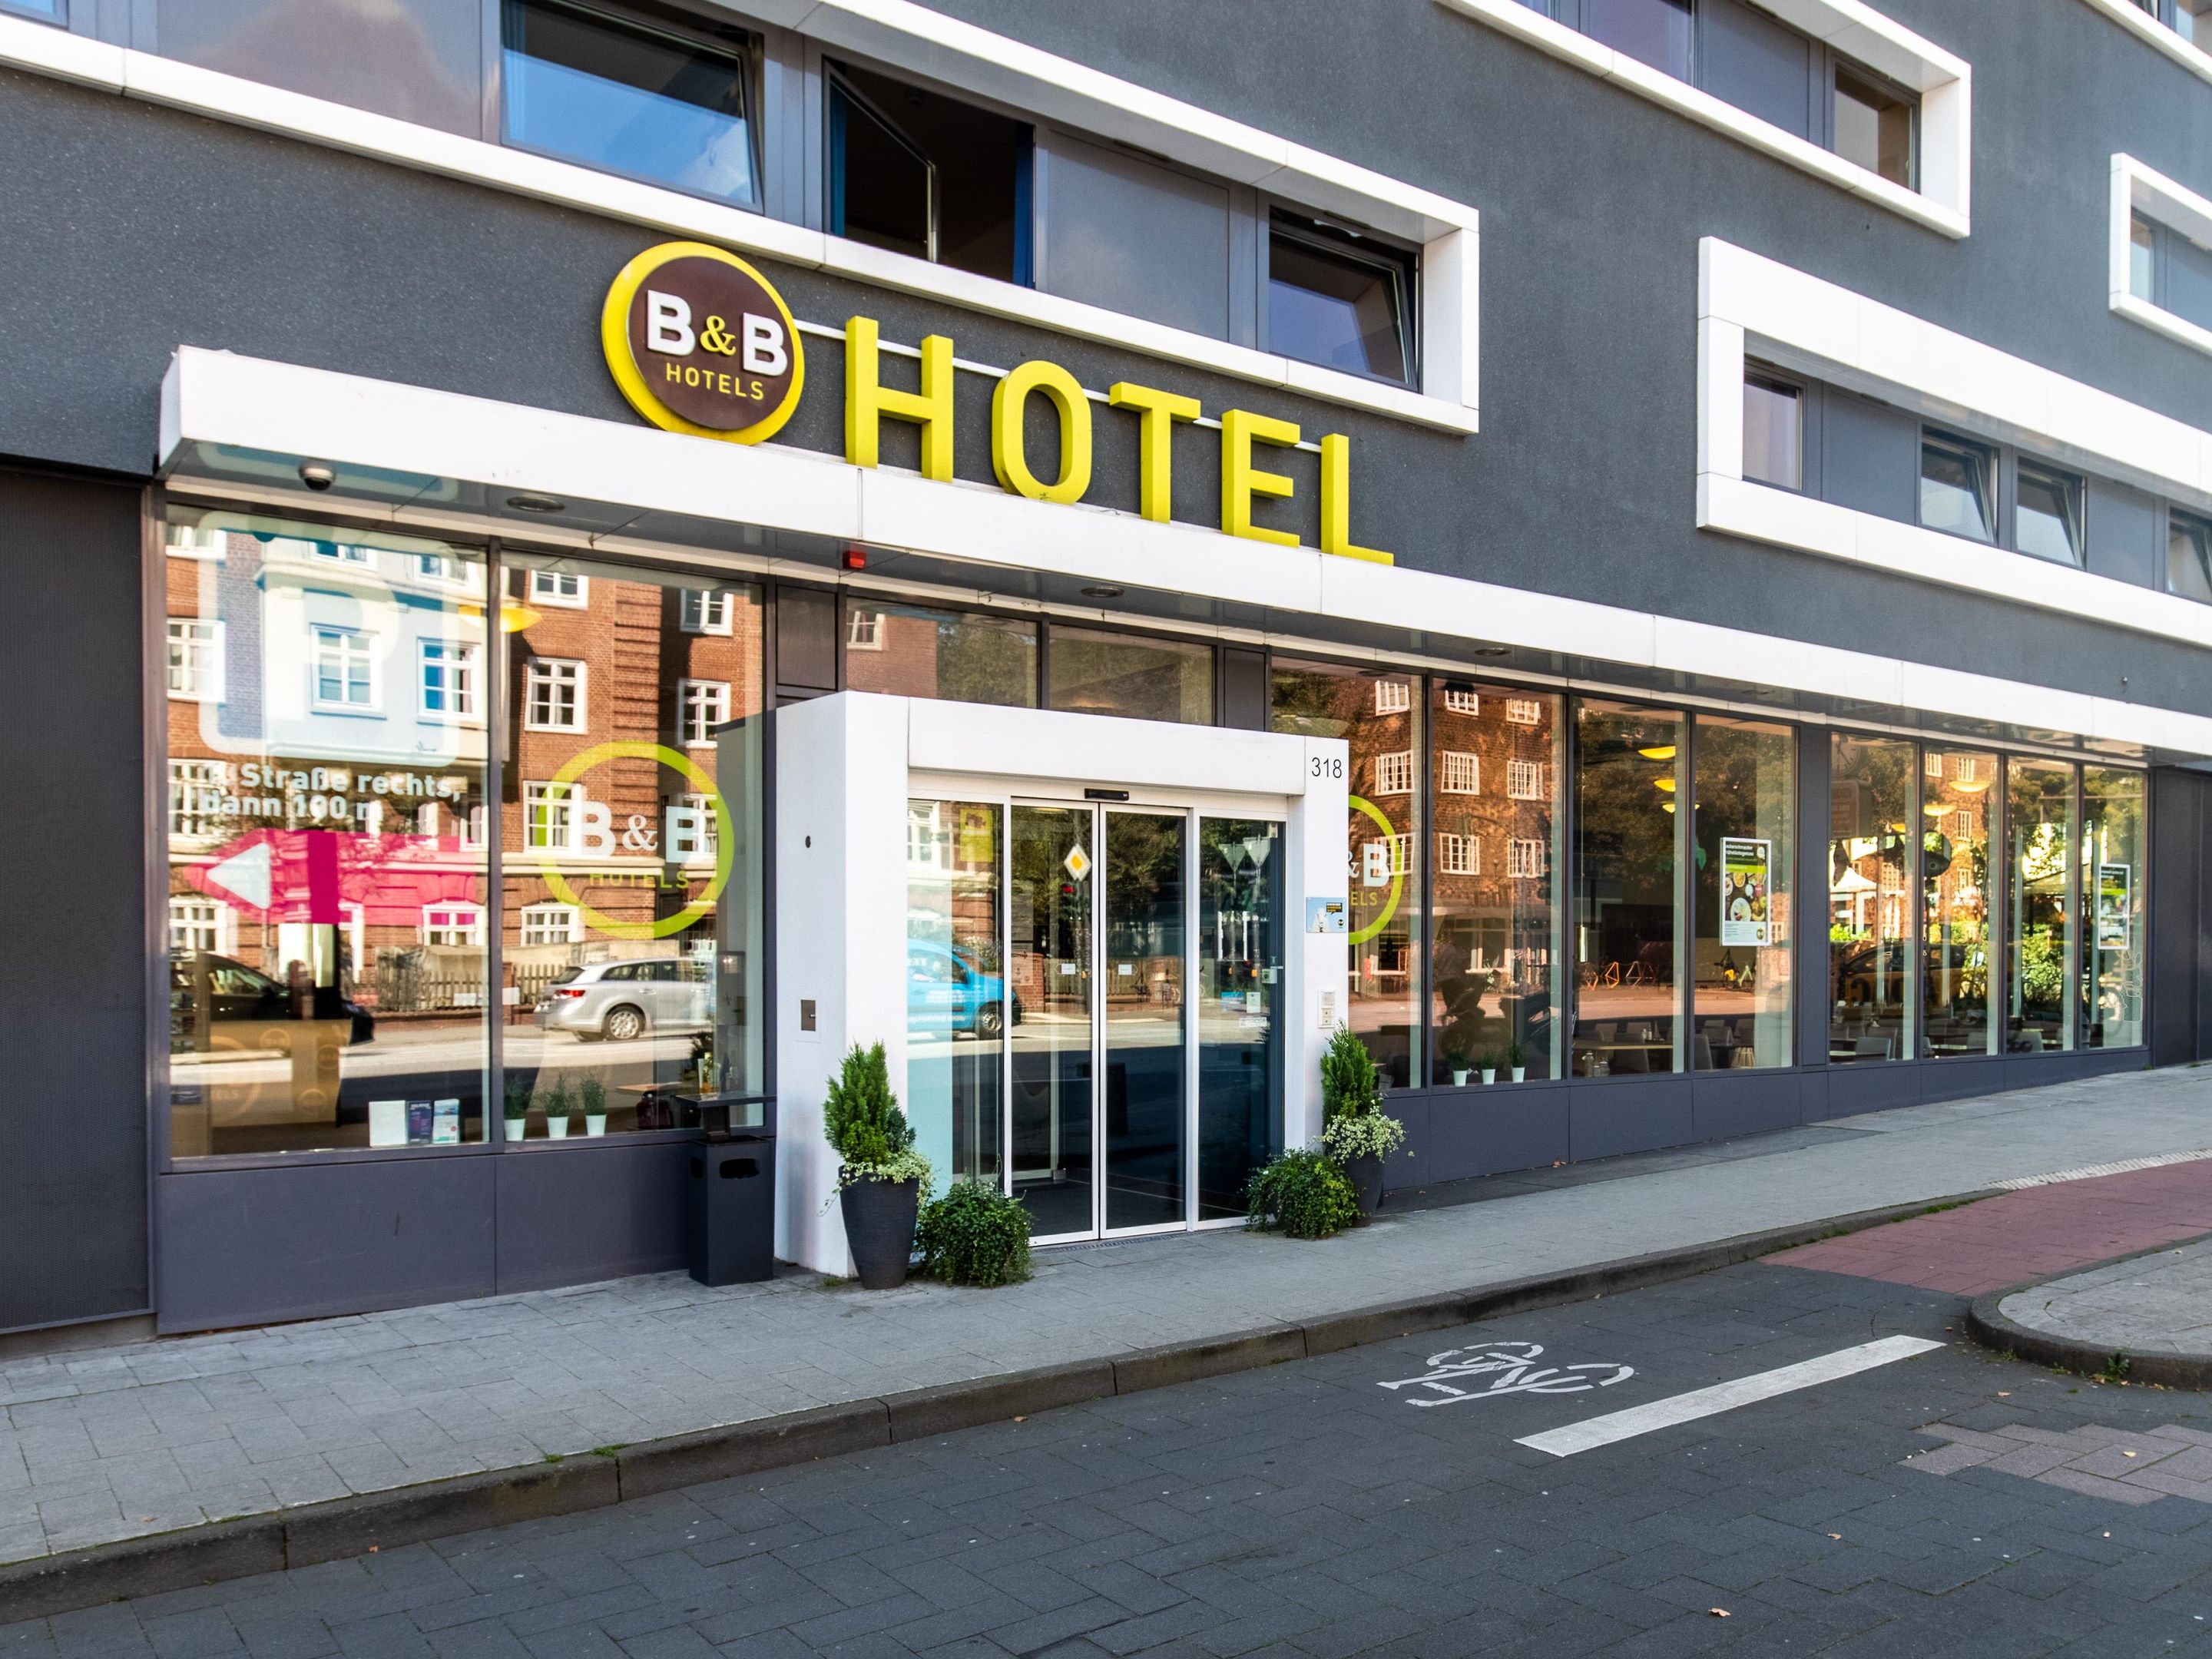 B&B HOTEL Hamburg-Altona, Stresemannstraße 318 in Hamburg